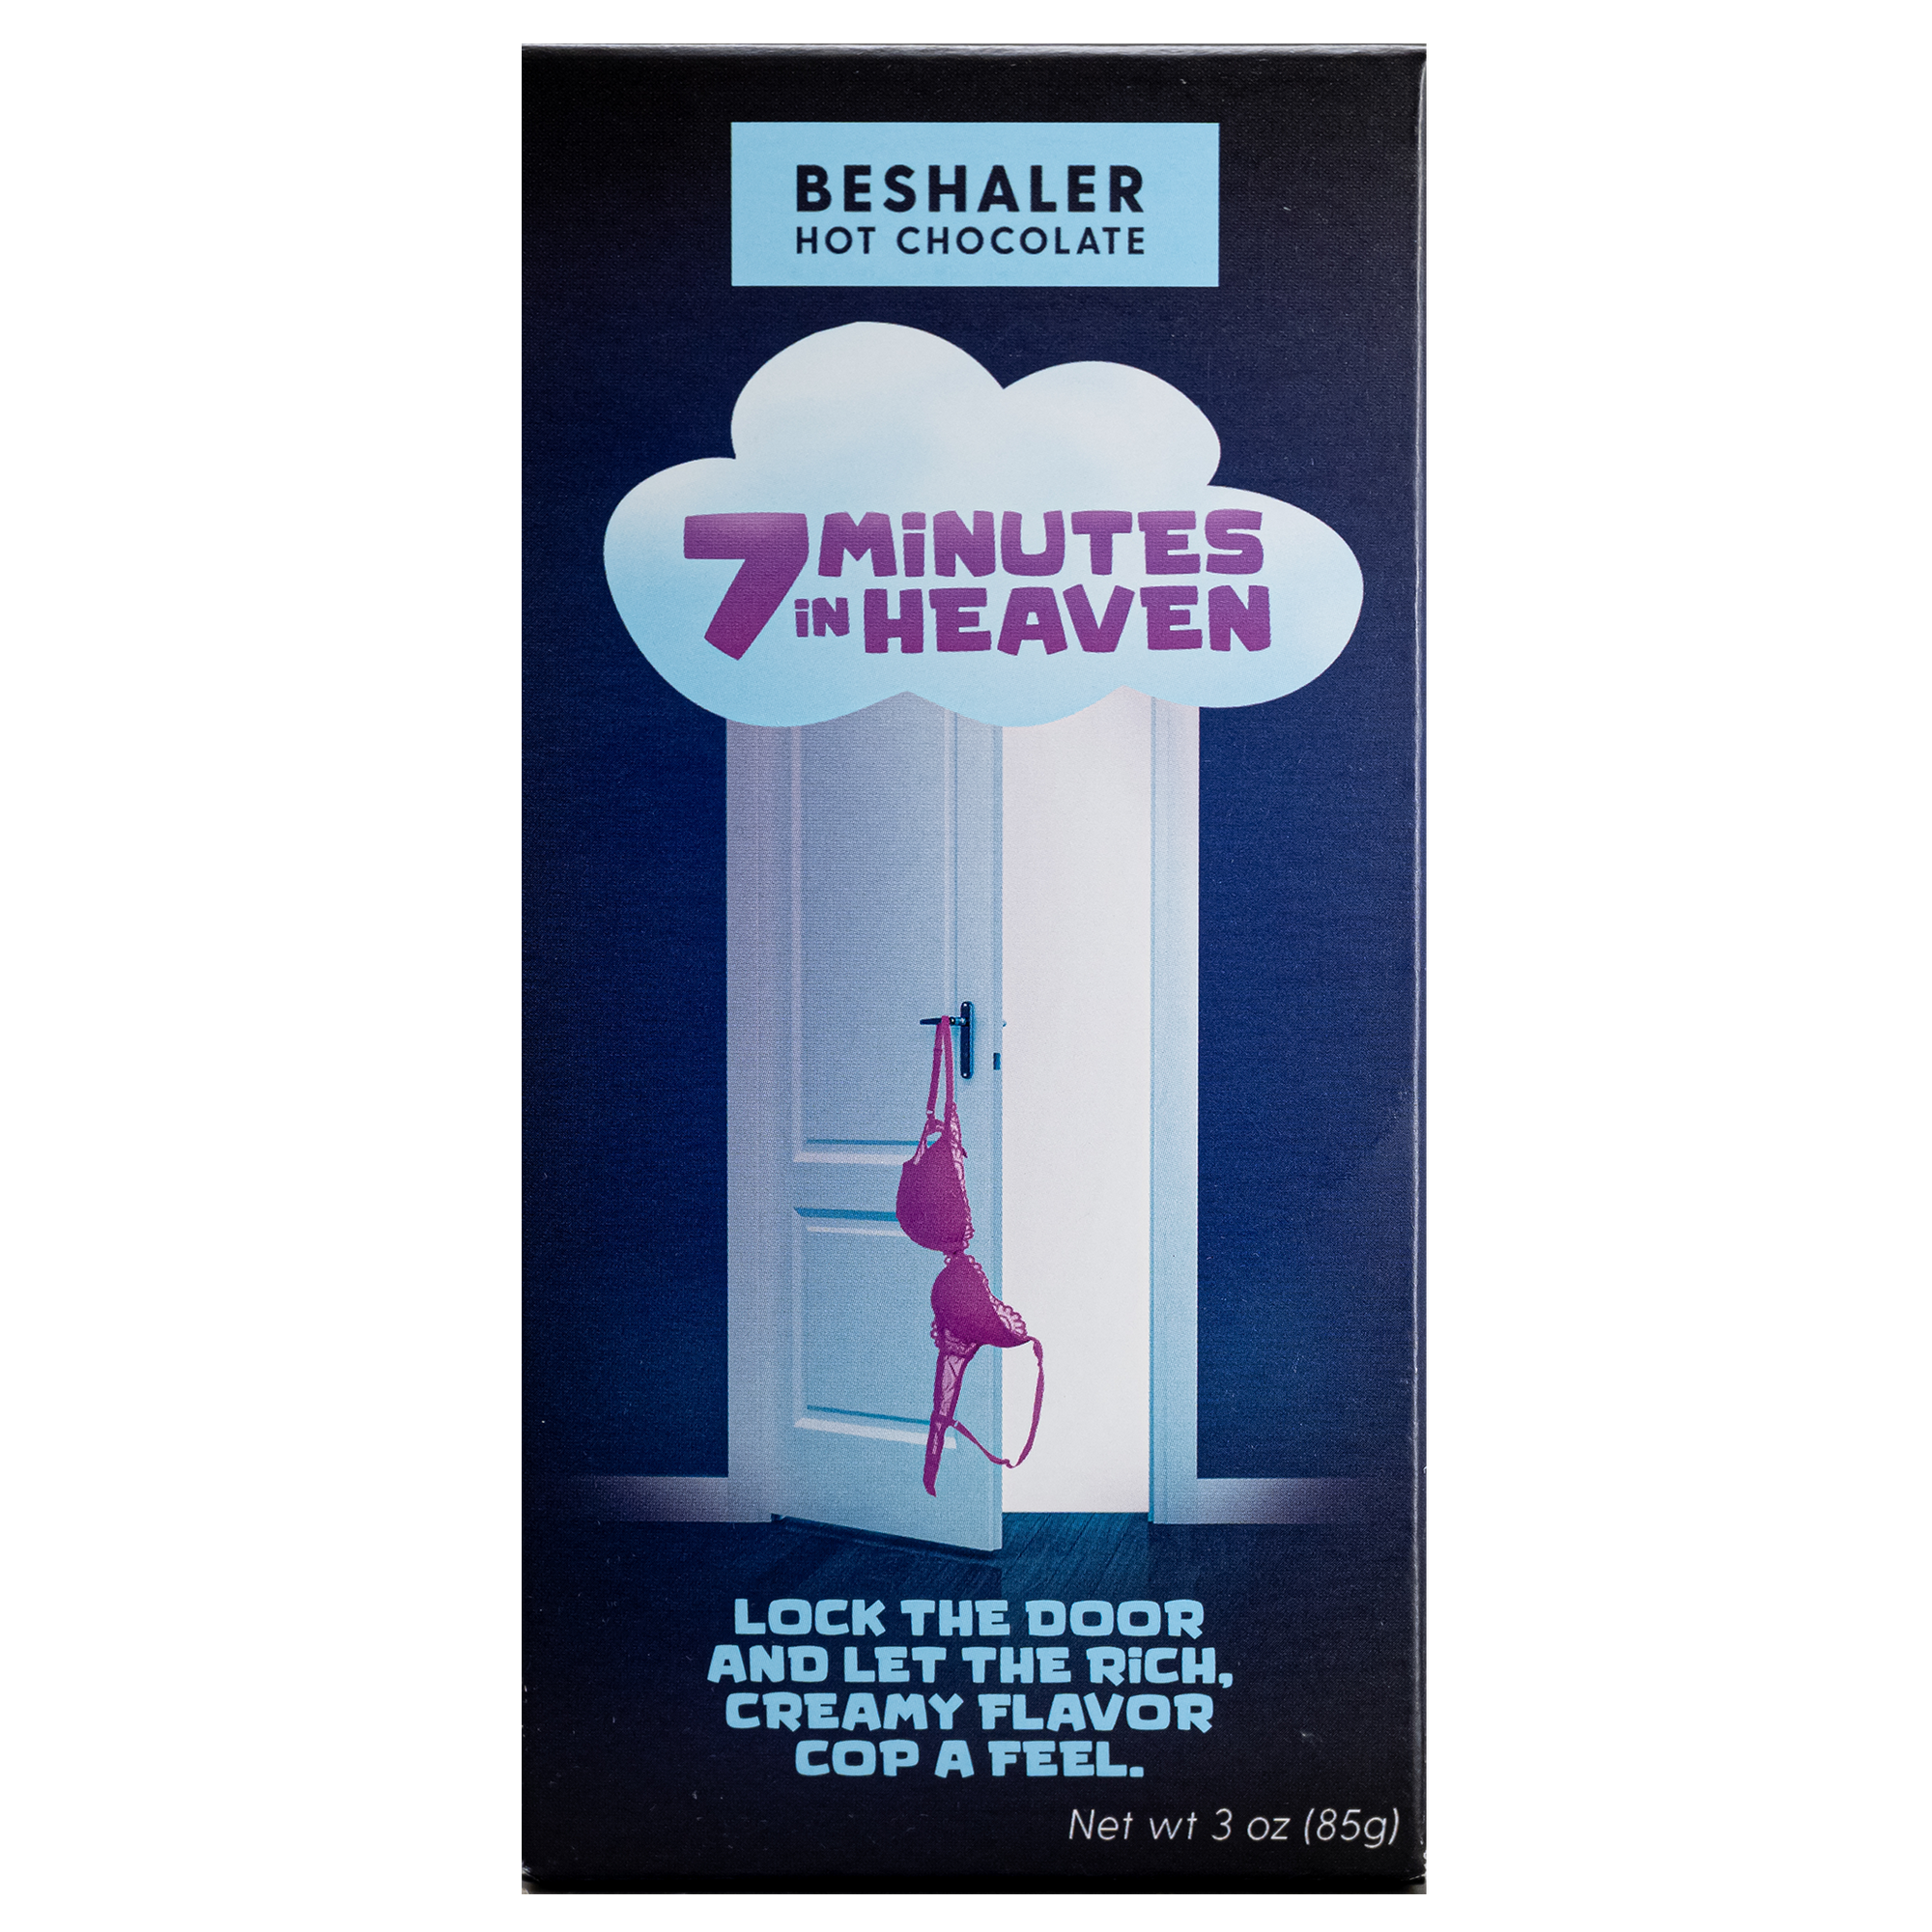 Beshaler Hot Chocolate - 7 Minutes in Heaven